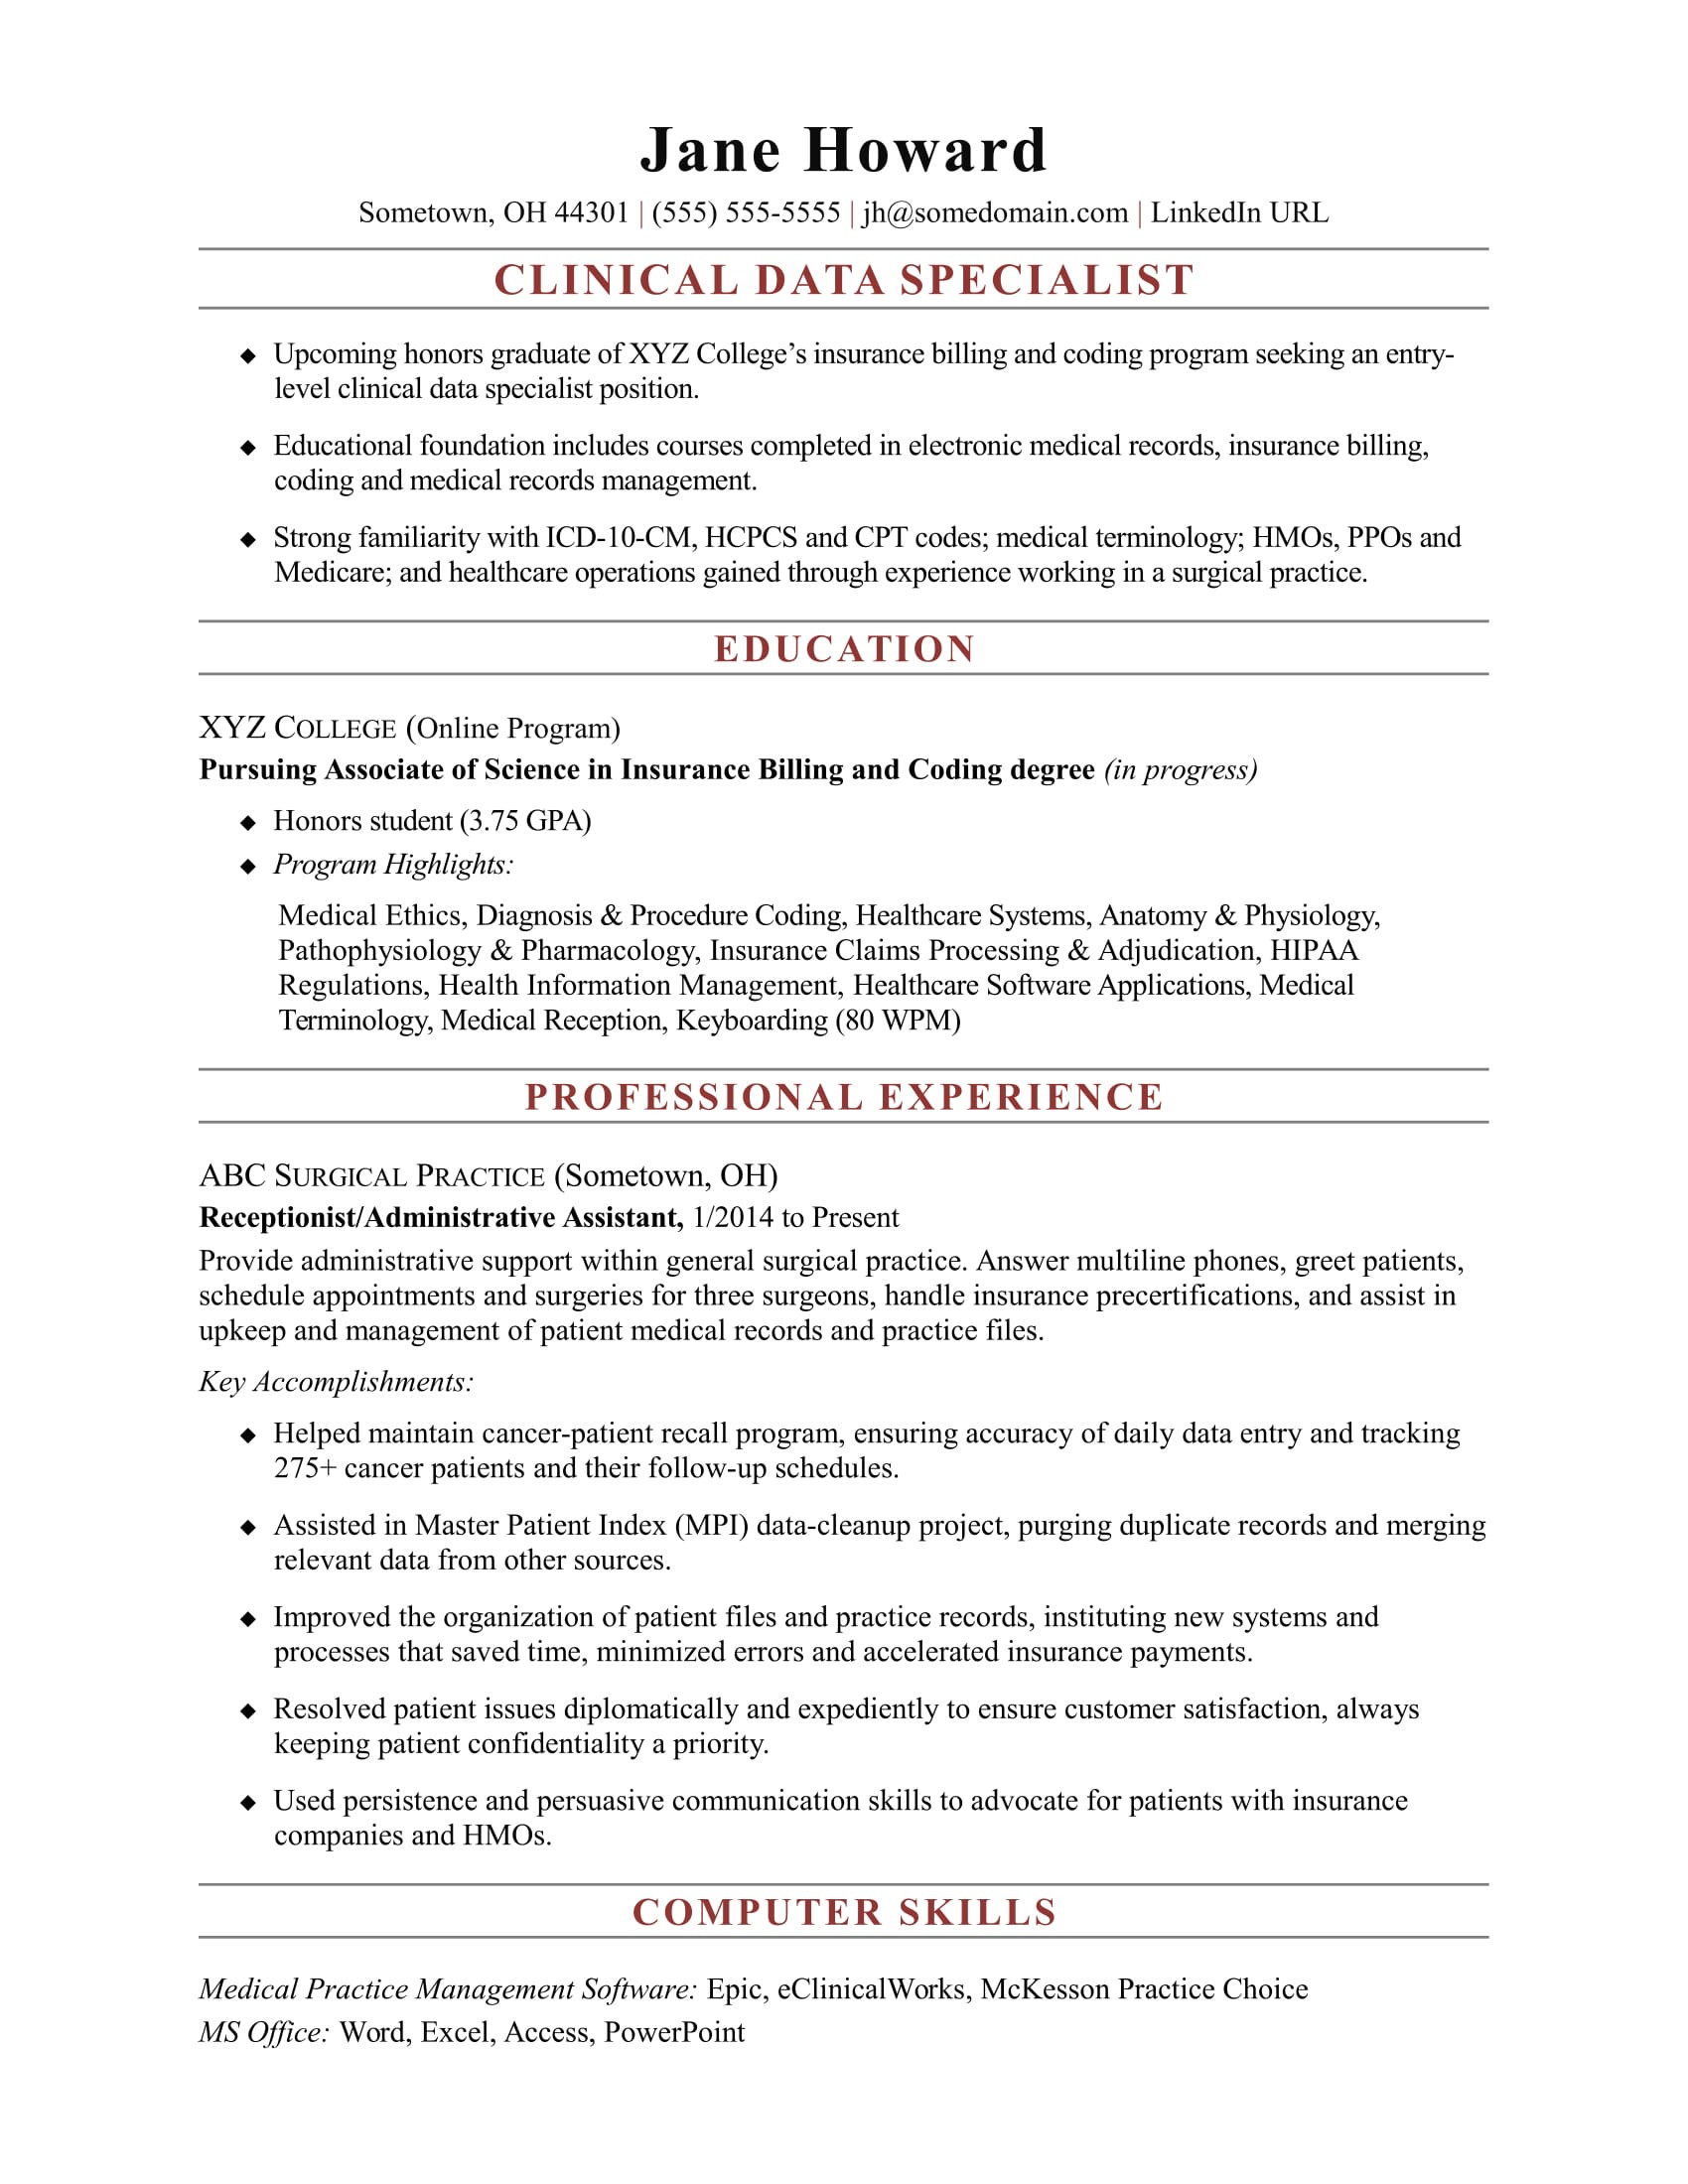 Resume Samples for Entry Level Management Entry-level Clinical Data Specialist Resume Sample Monster.com